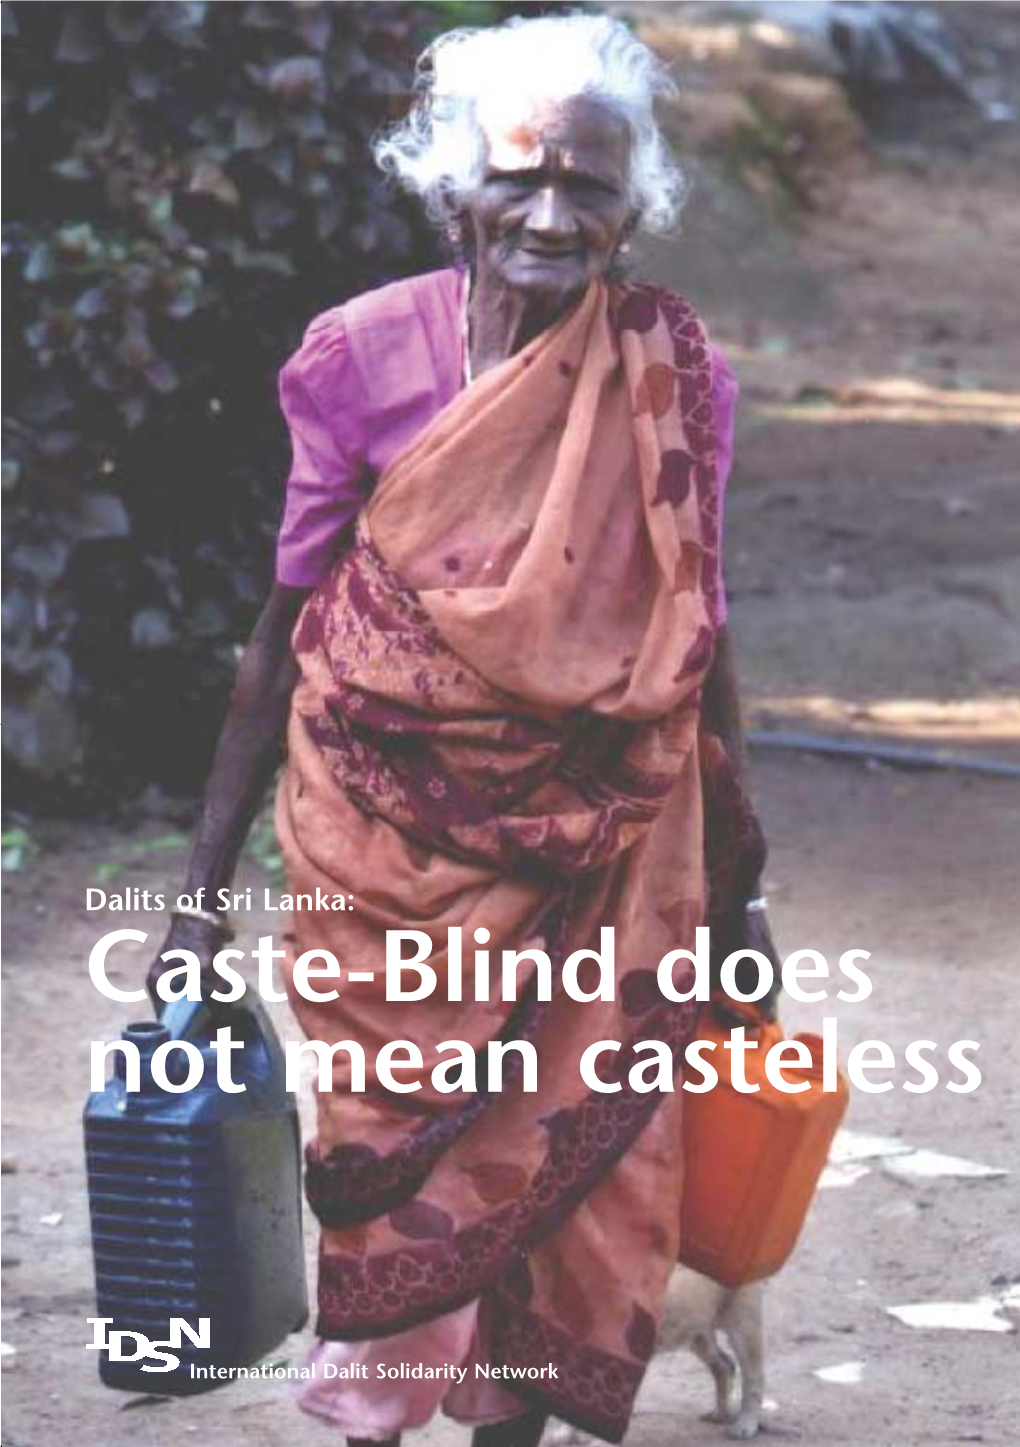 Dalits of Sri Lanka: Caste-Blind Does Not Mean Casteless